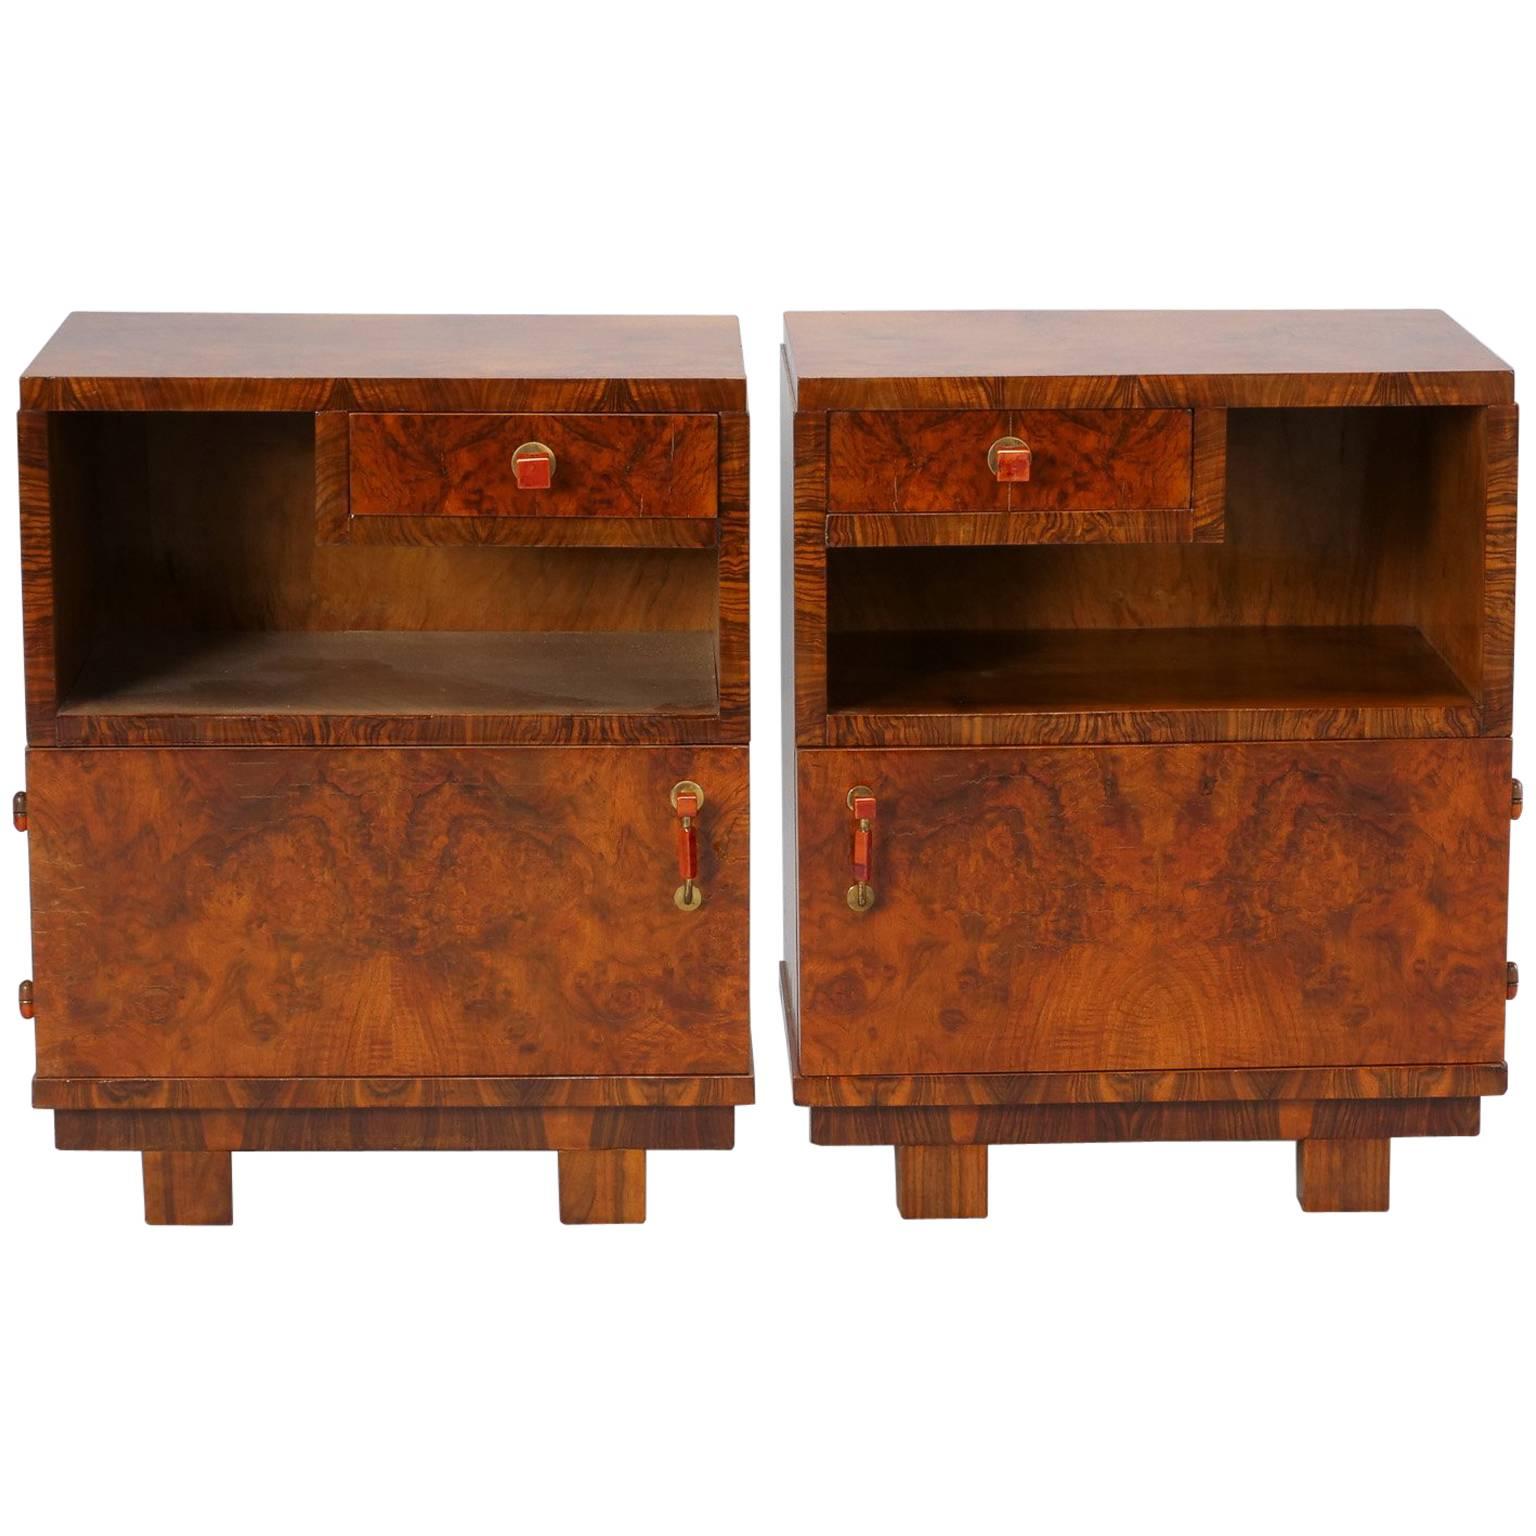 Pair of Deco Burl Wood Bedside Cabinets with Bakelite Handles